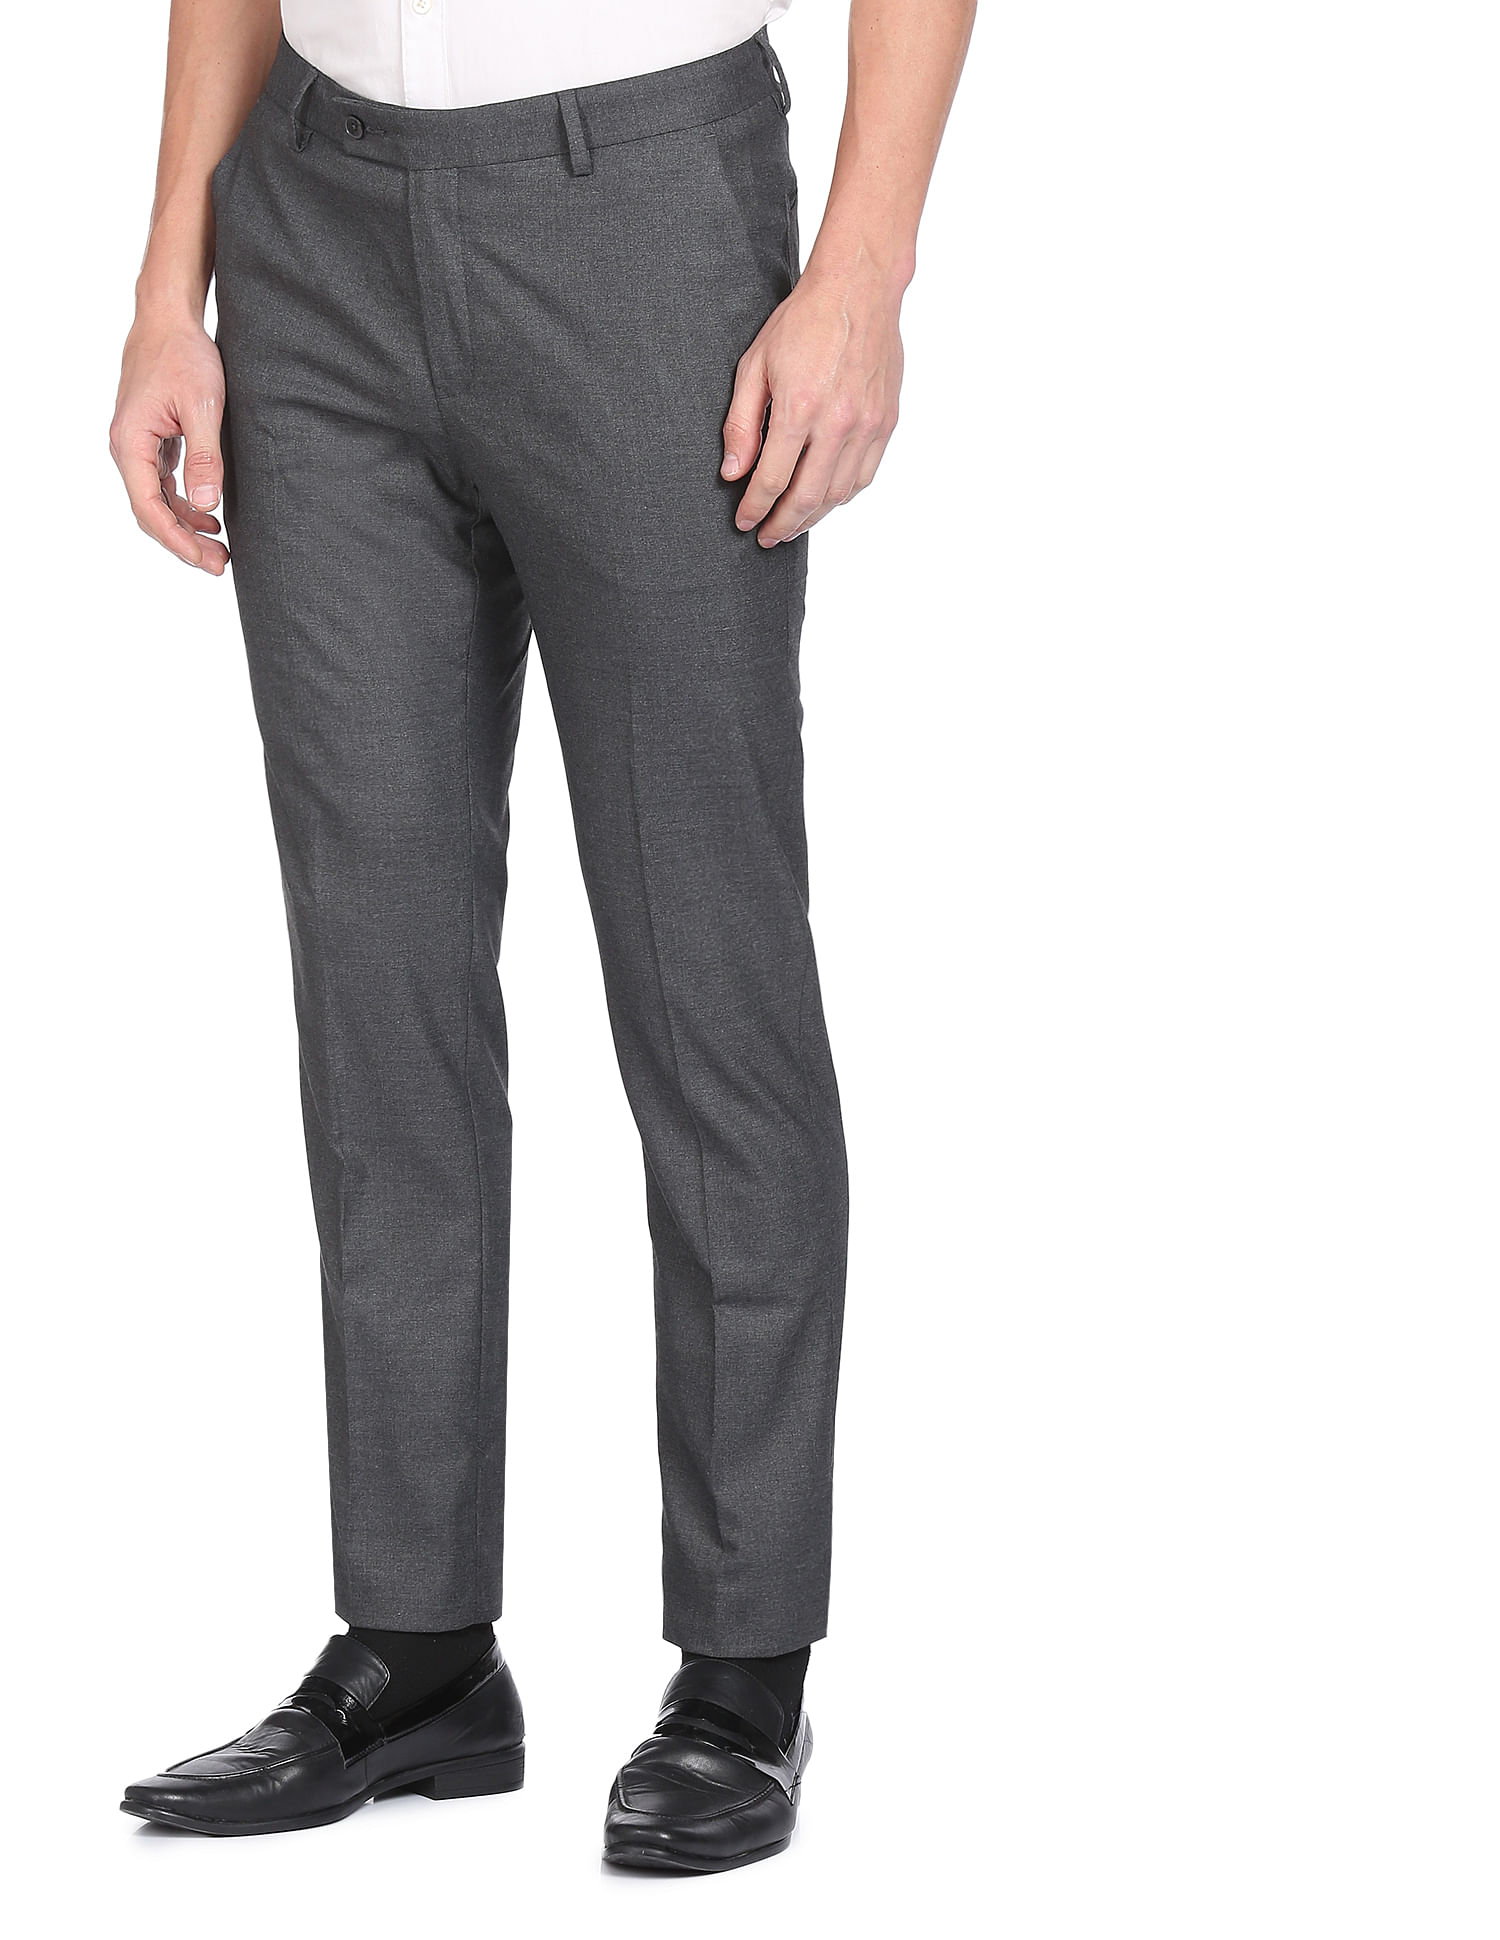 Grey Formal pants for Men | Lyst Canada